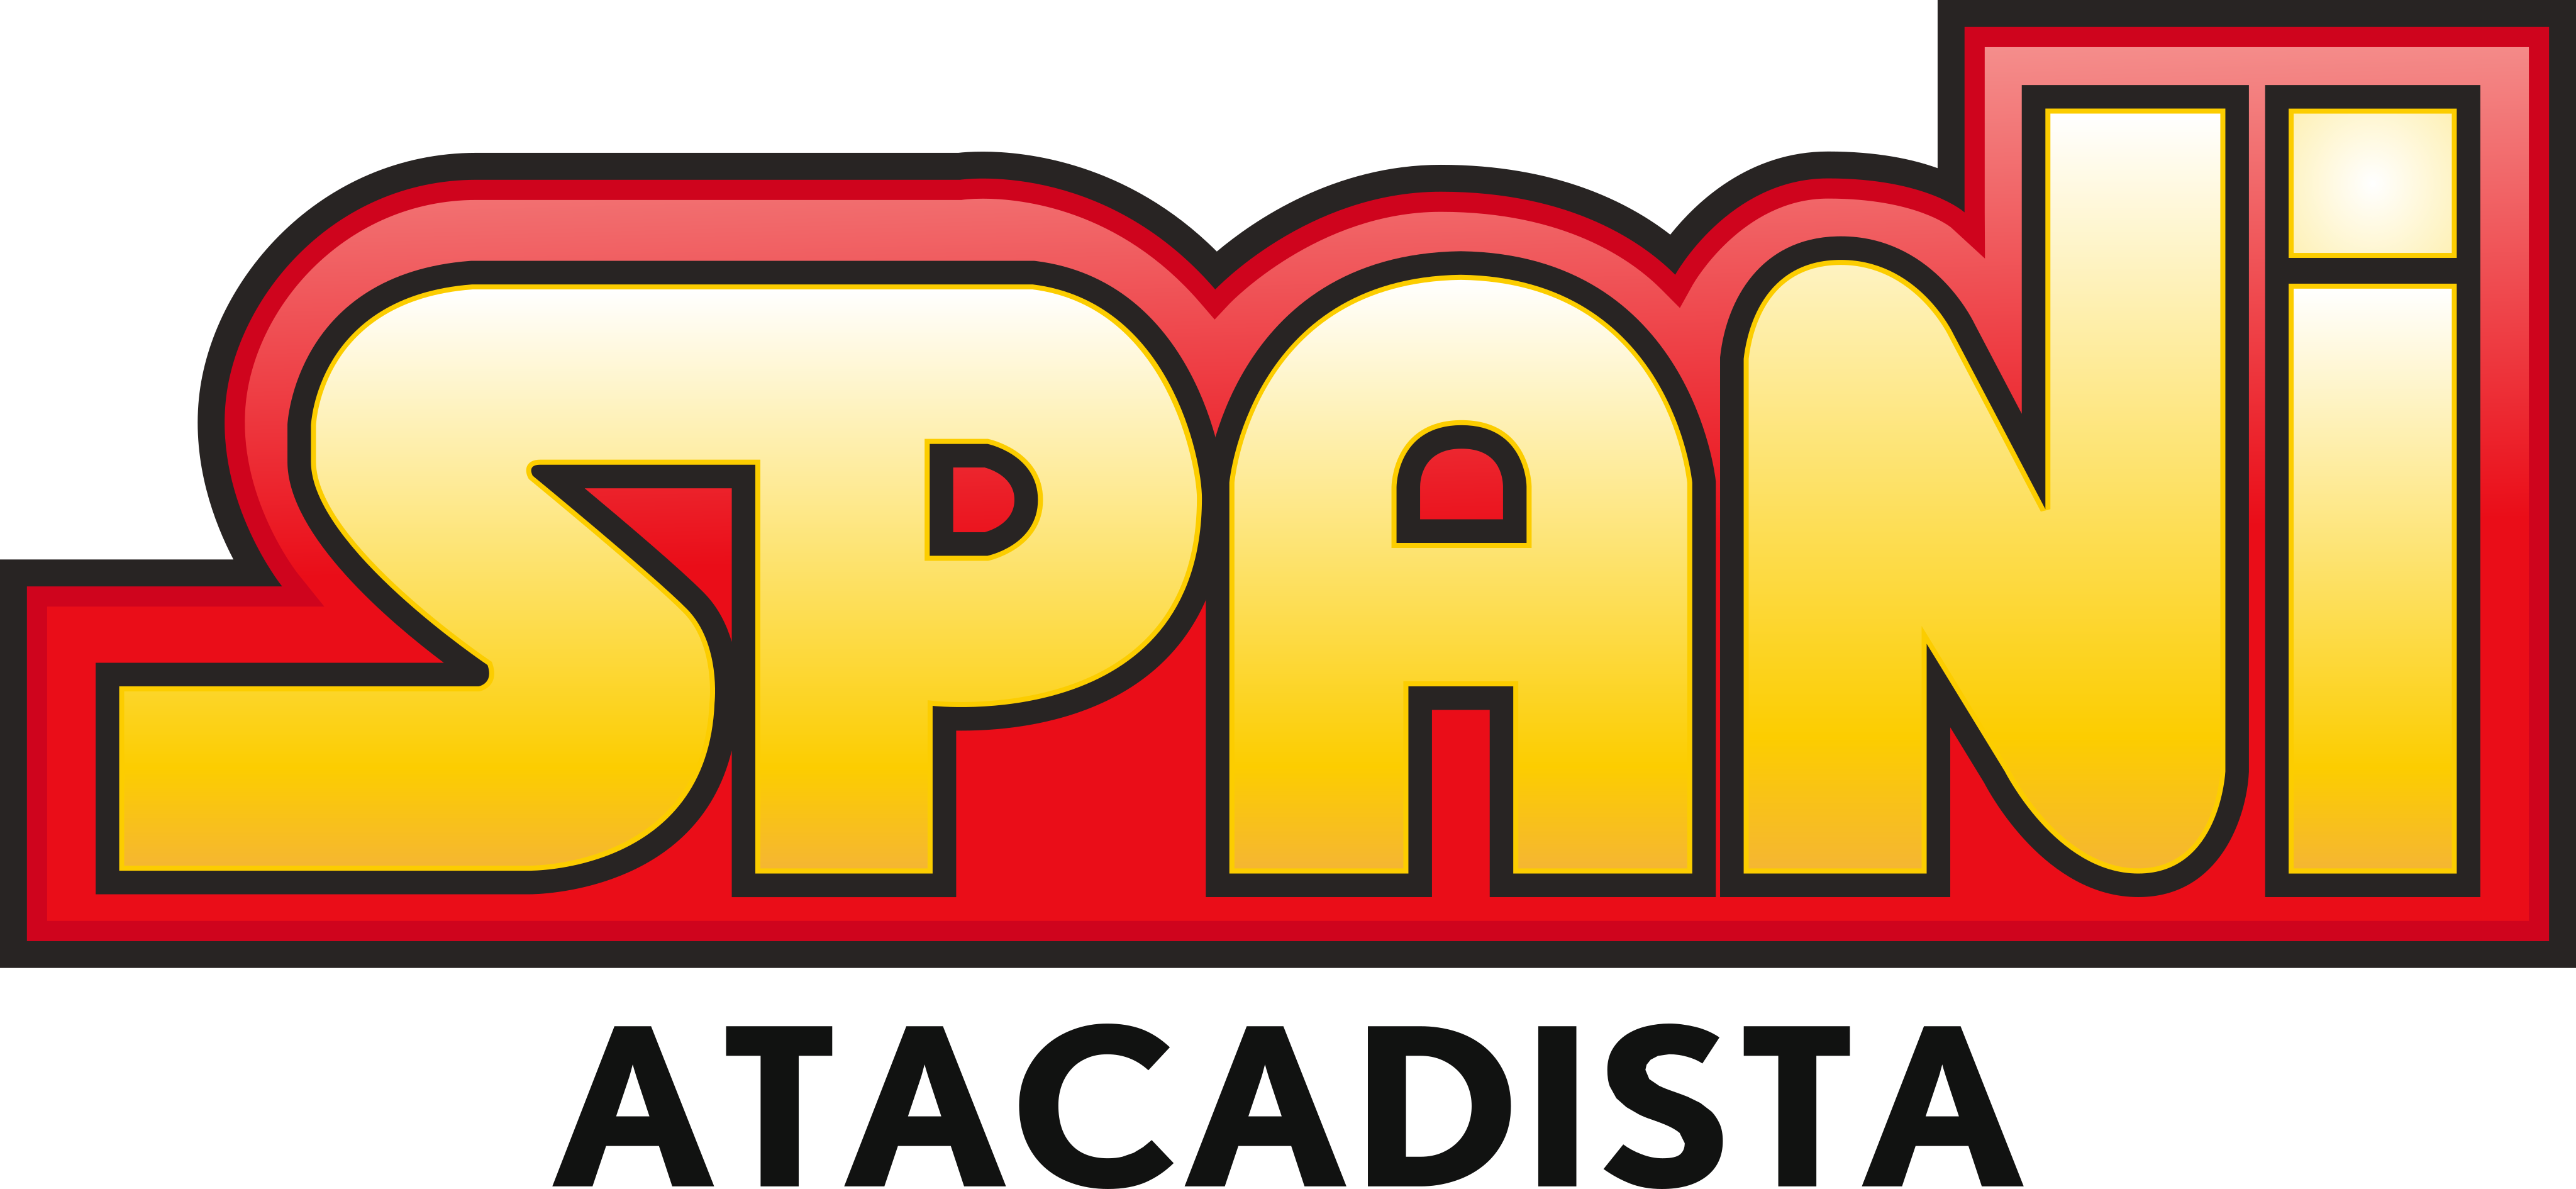 Spani Atacadista Logo.